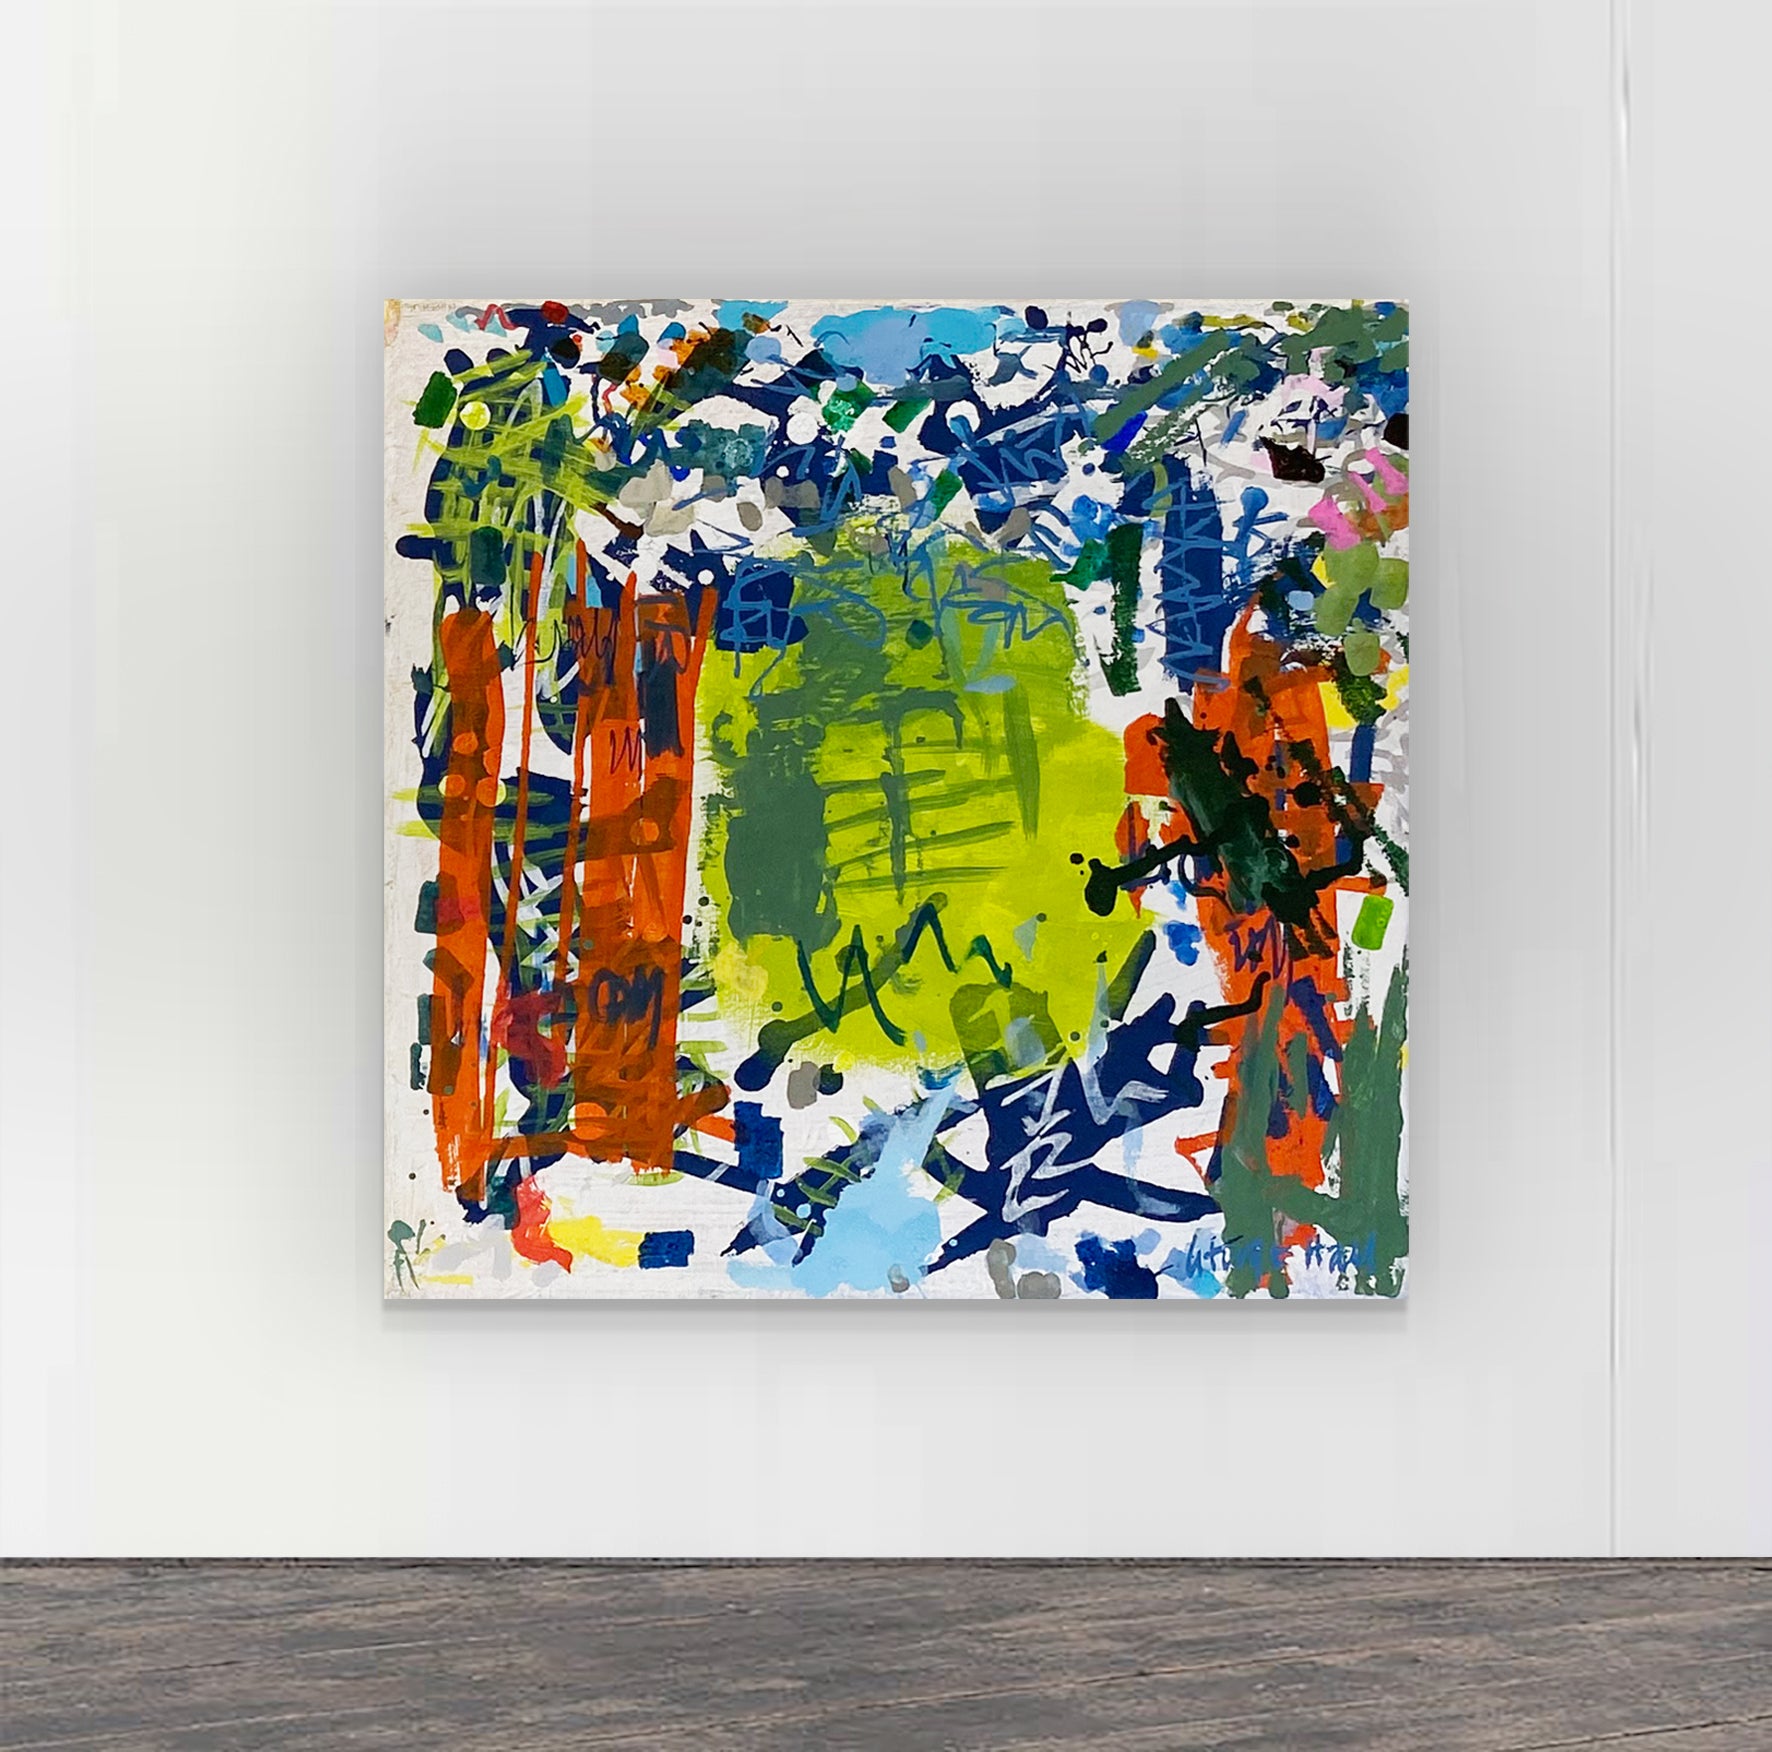 Euphoria - 137 x 137cm - acrylic on canvas